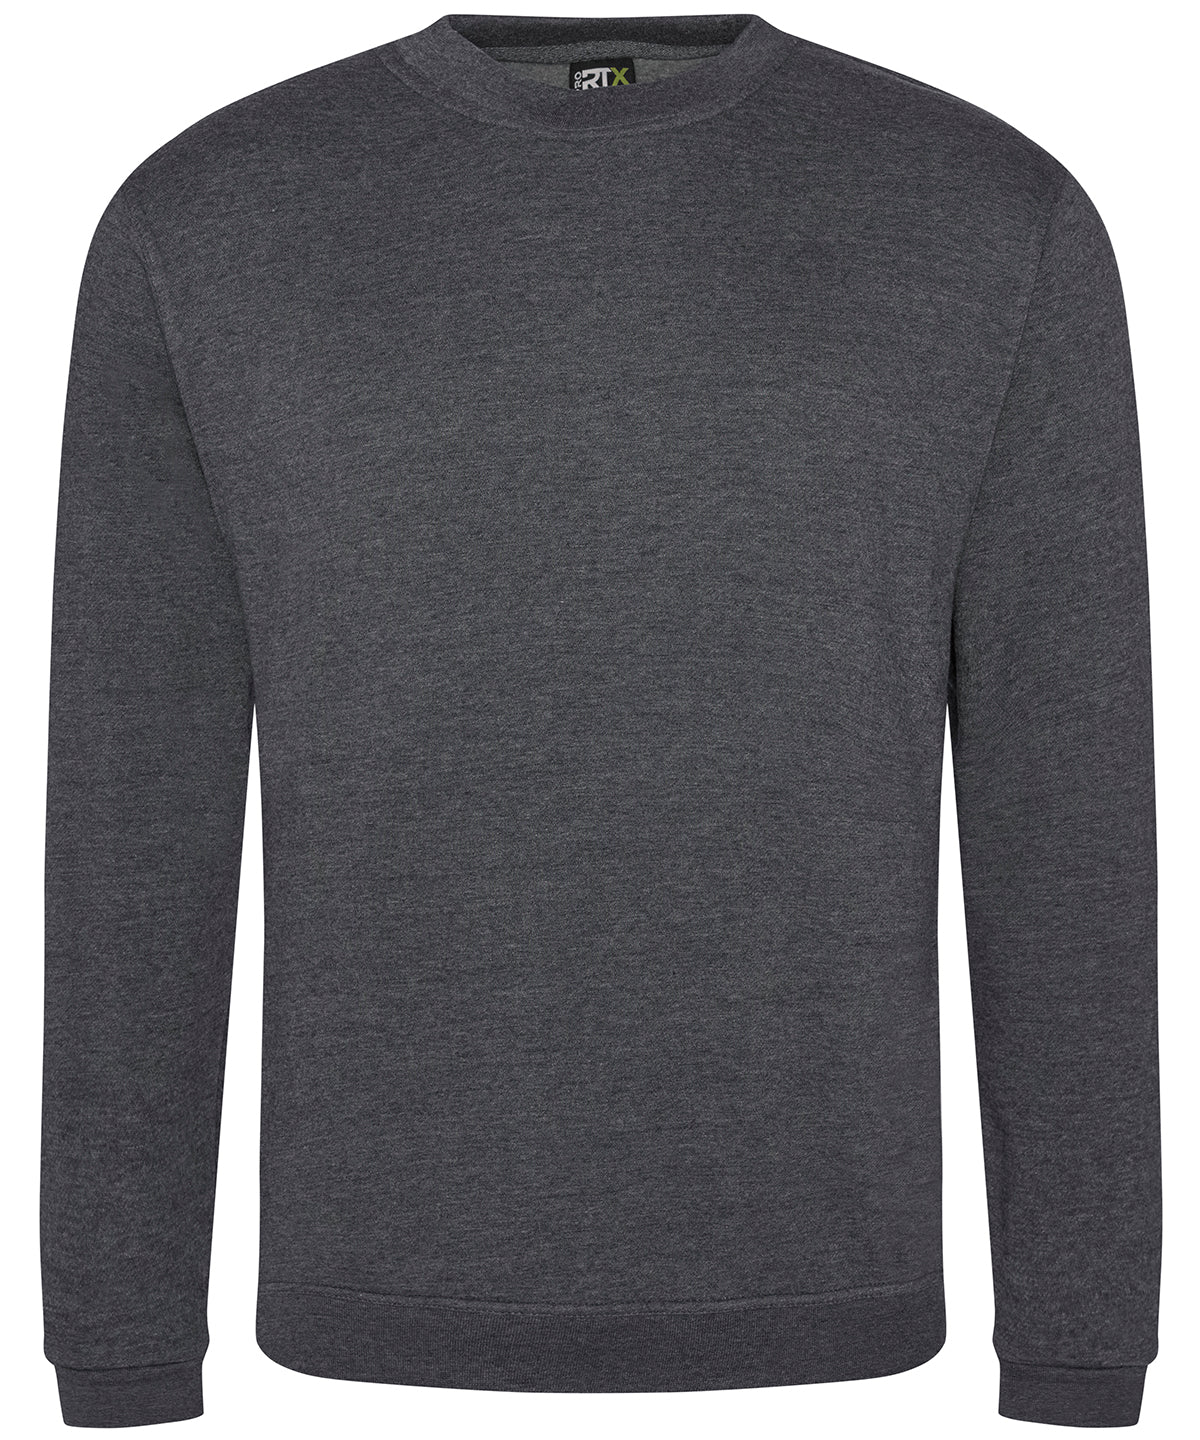 Medium Charcoal Sweatshirt - choose logo